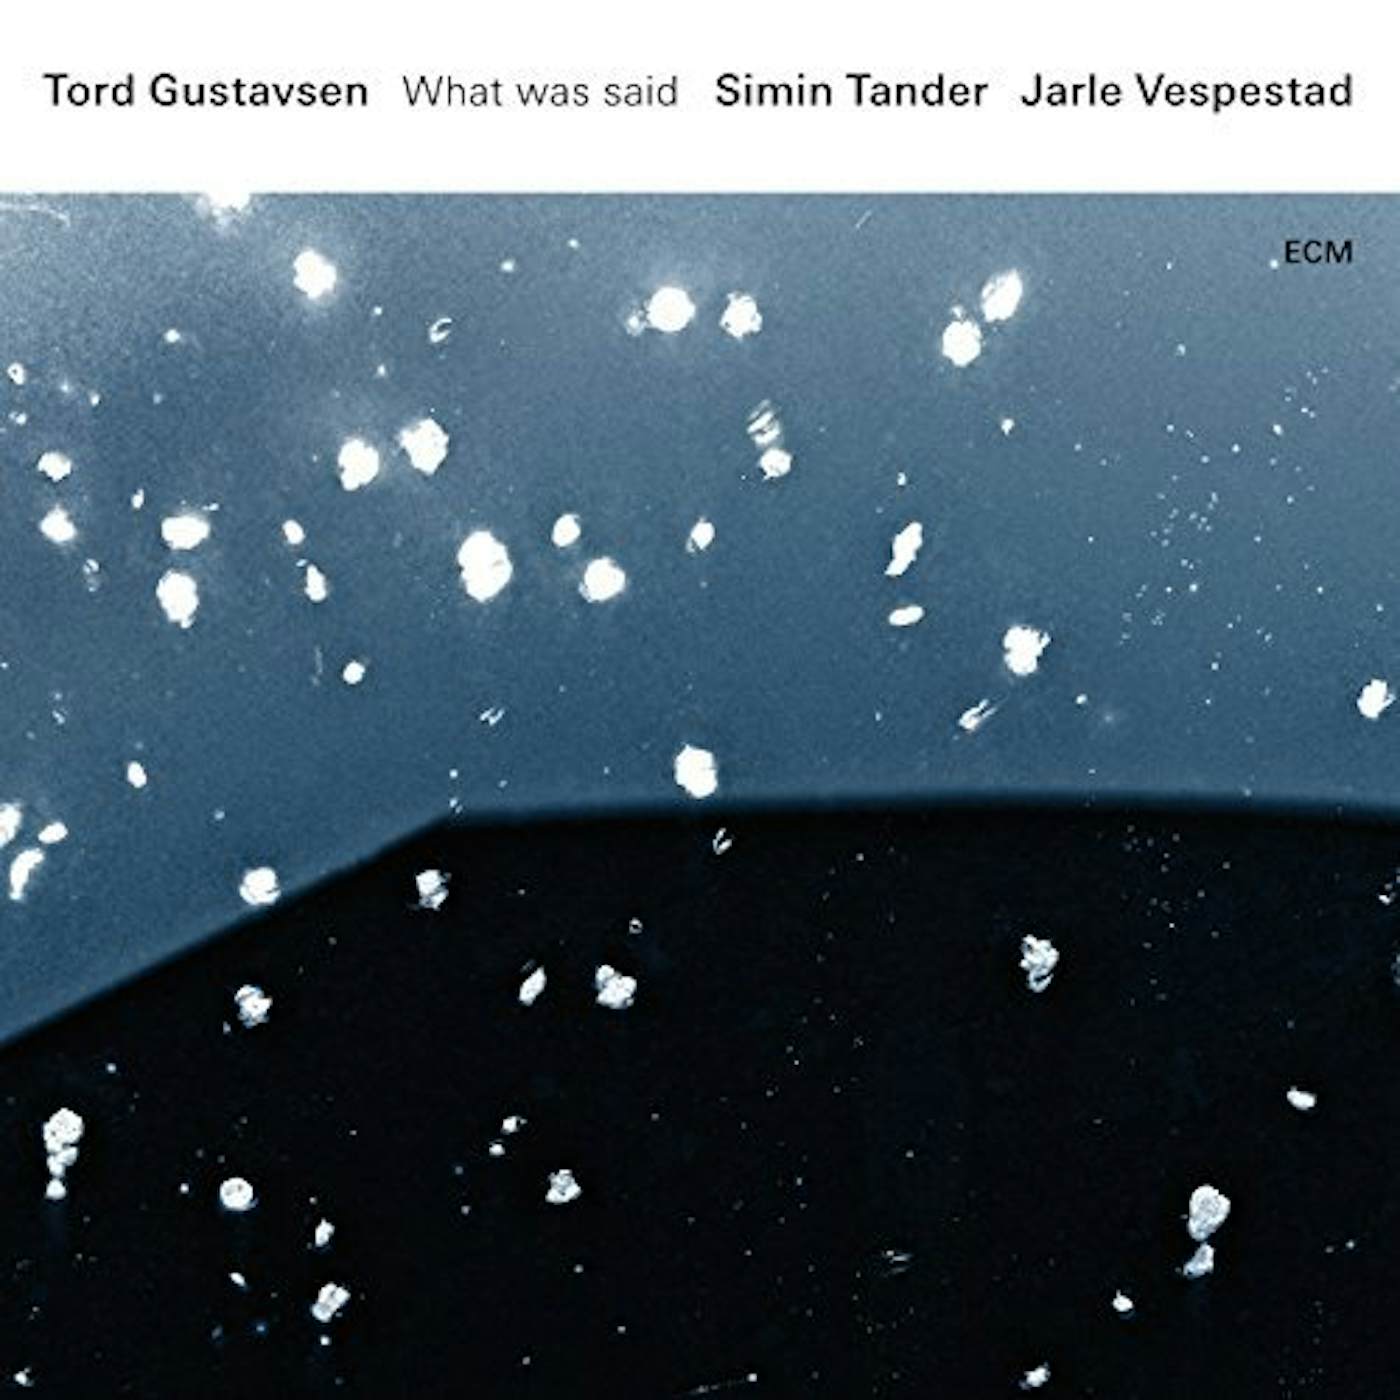 Tord Gustavsen What Was Said Vinyl Record